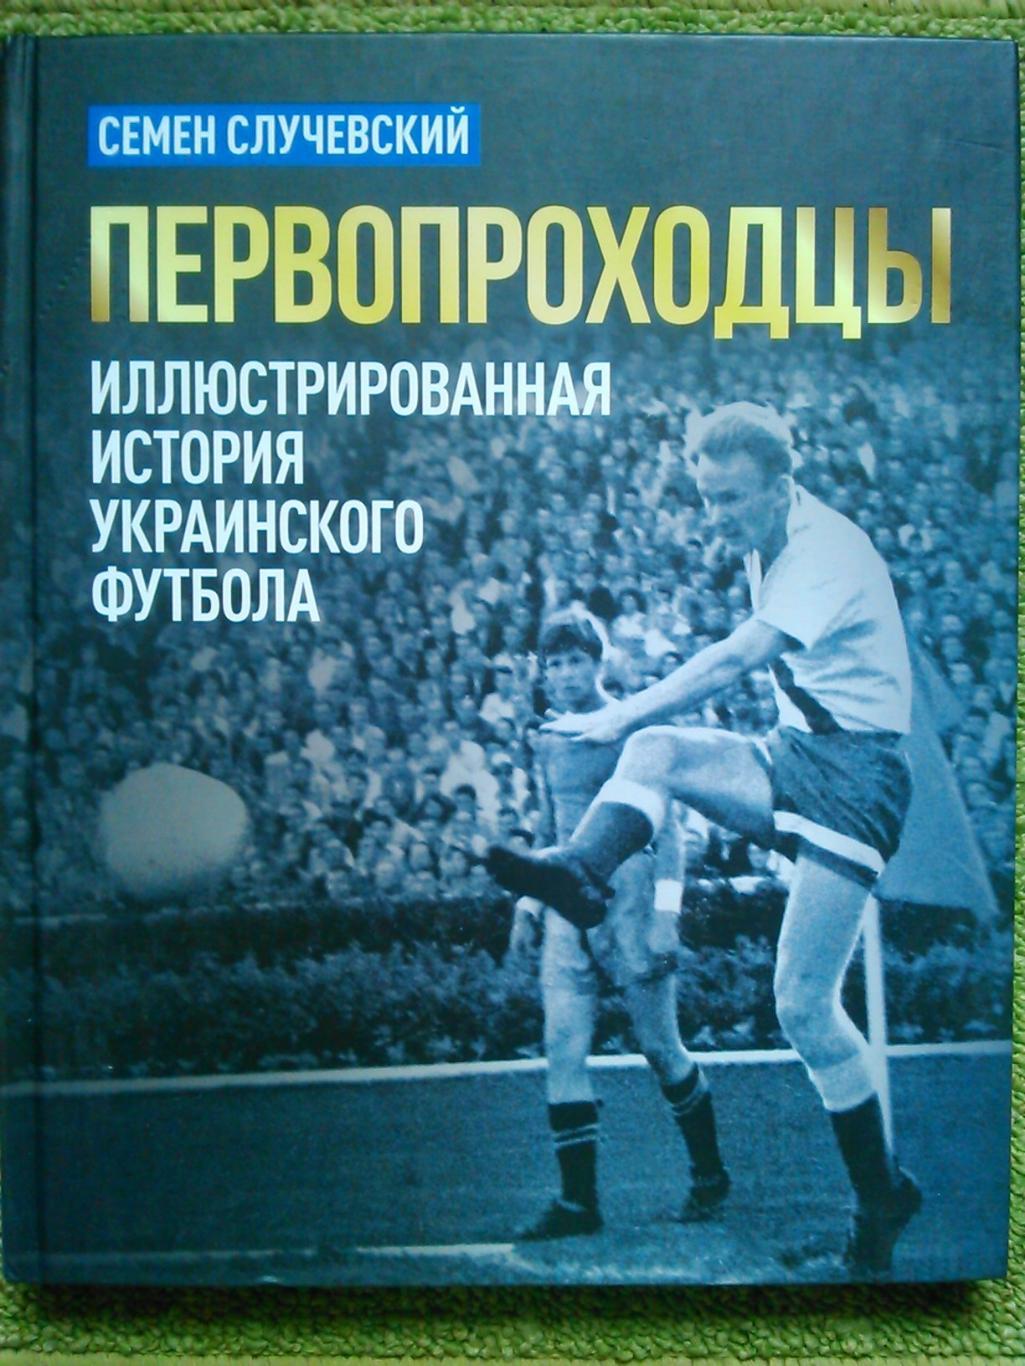 Футбол (Украина) №05(435).2006. Постер-ФРАНЦИЯ. Отлично сохранен! 1